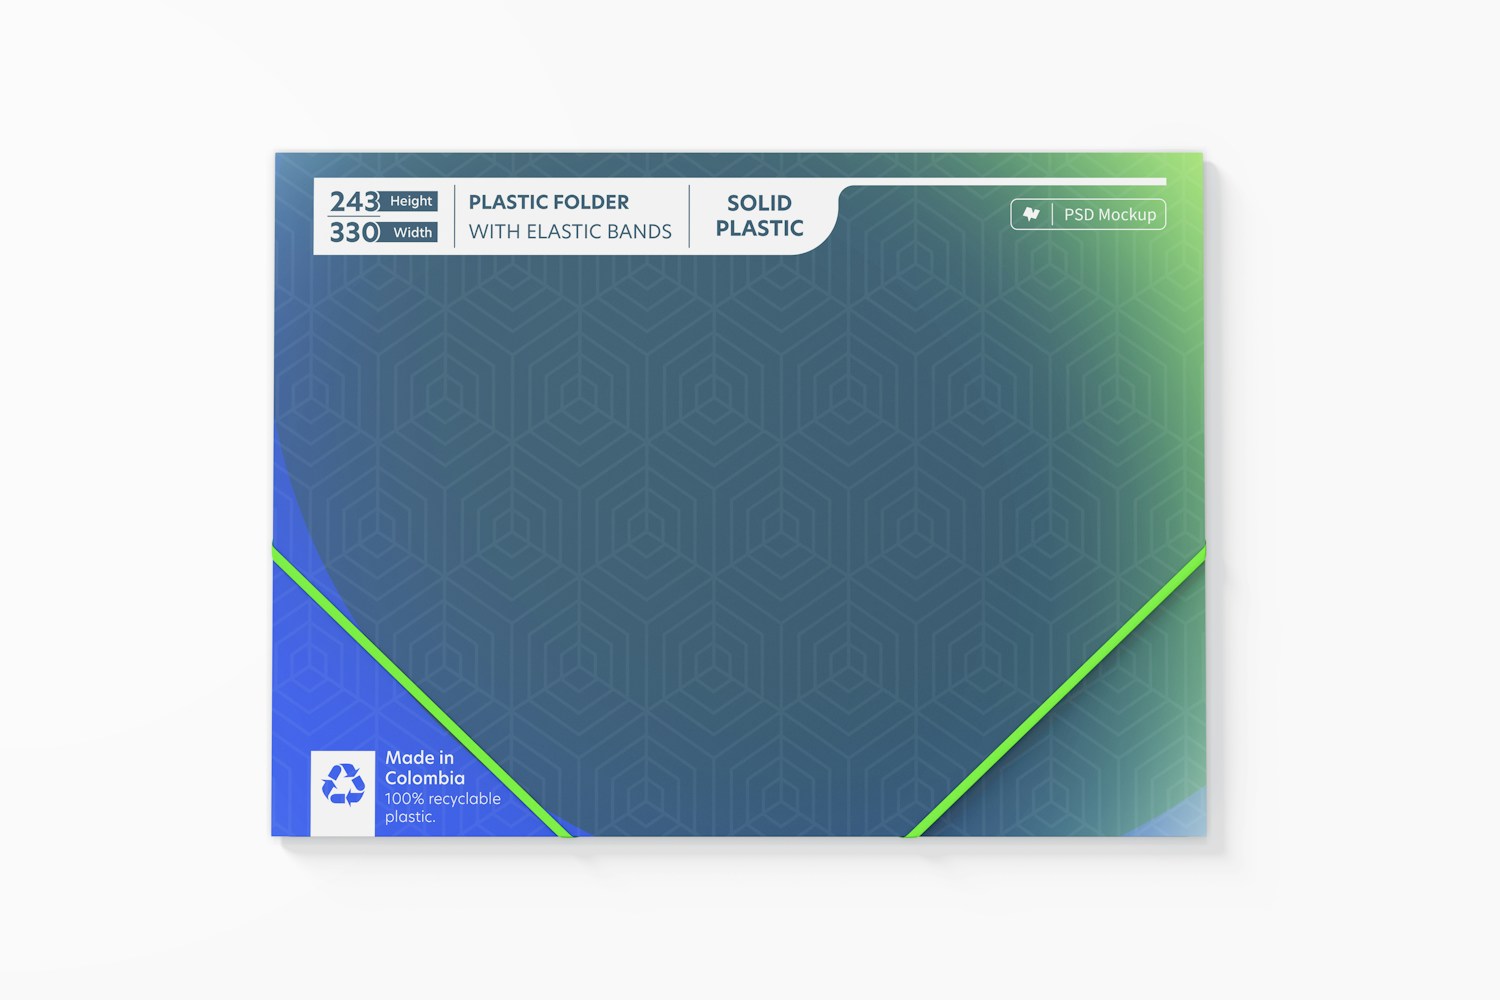 Plastic Folder with Elastic Bands Mockup, Top View